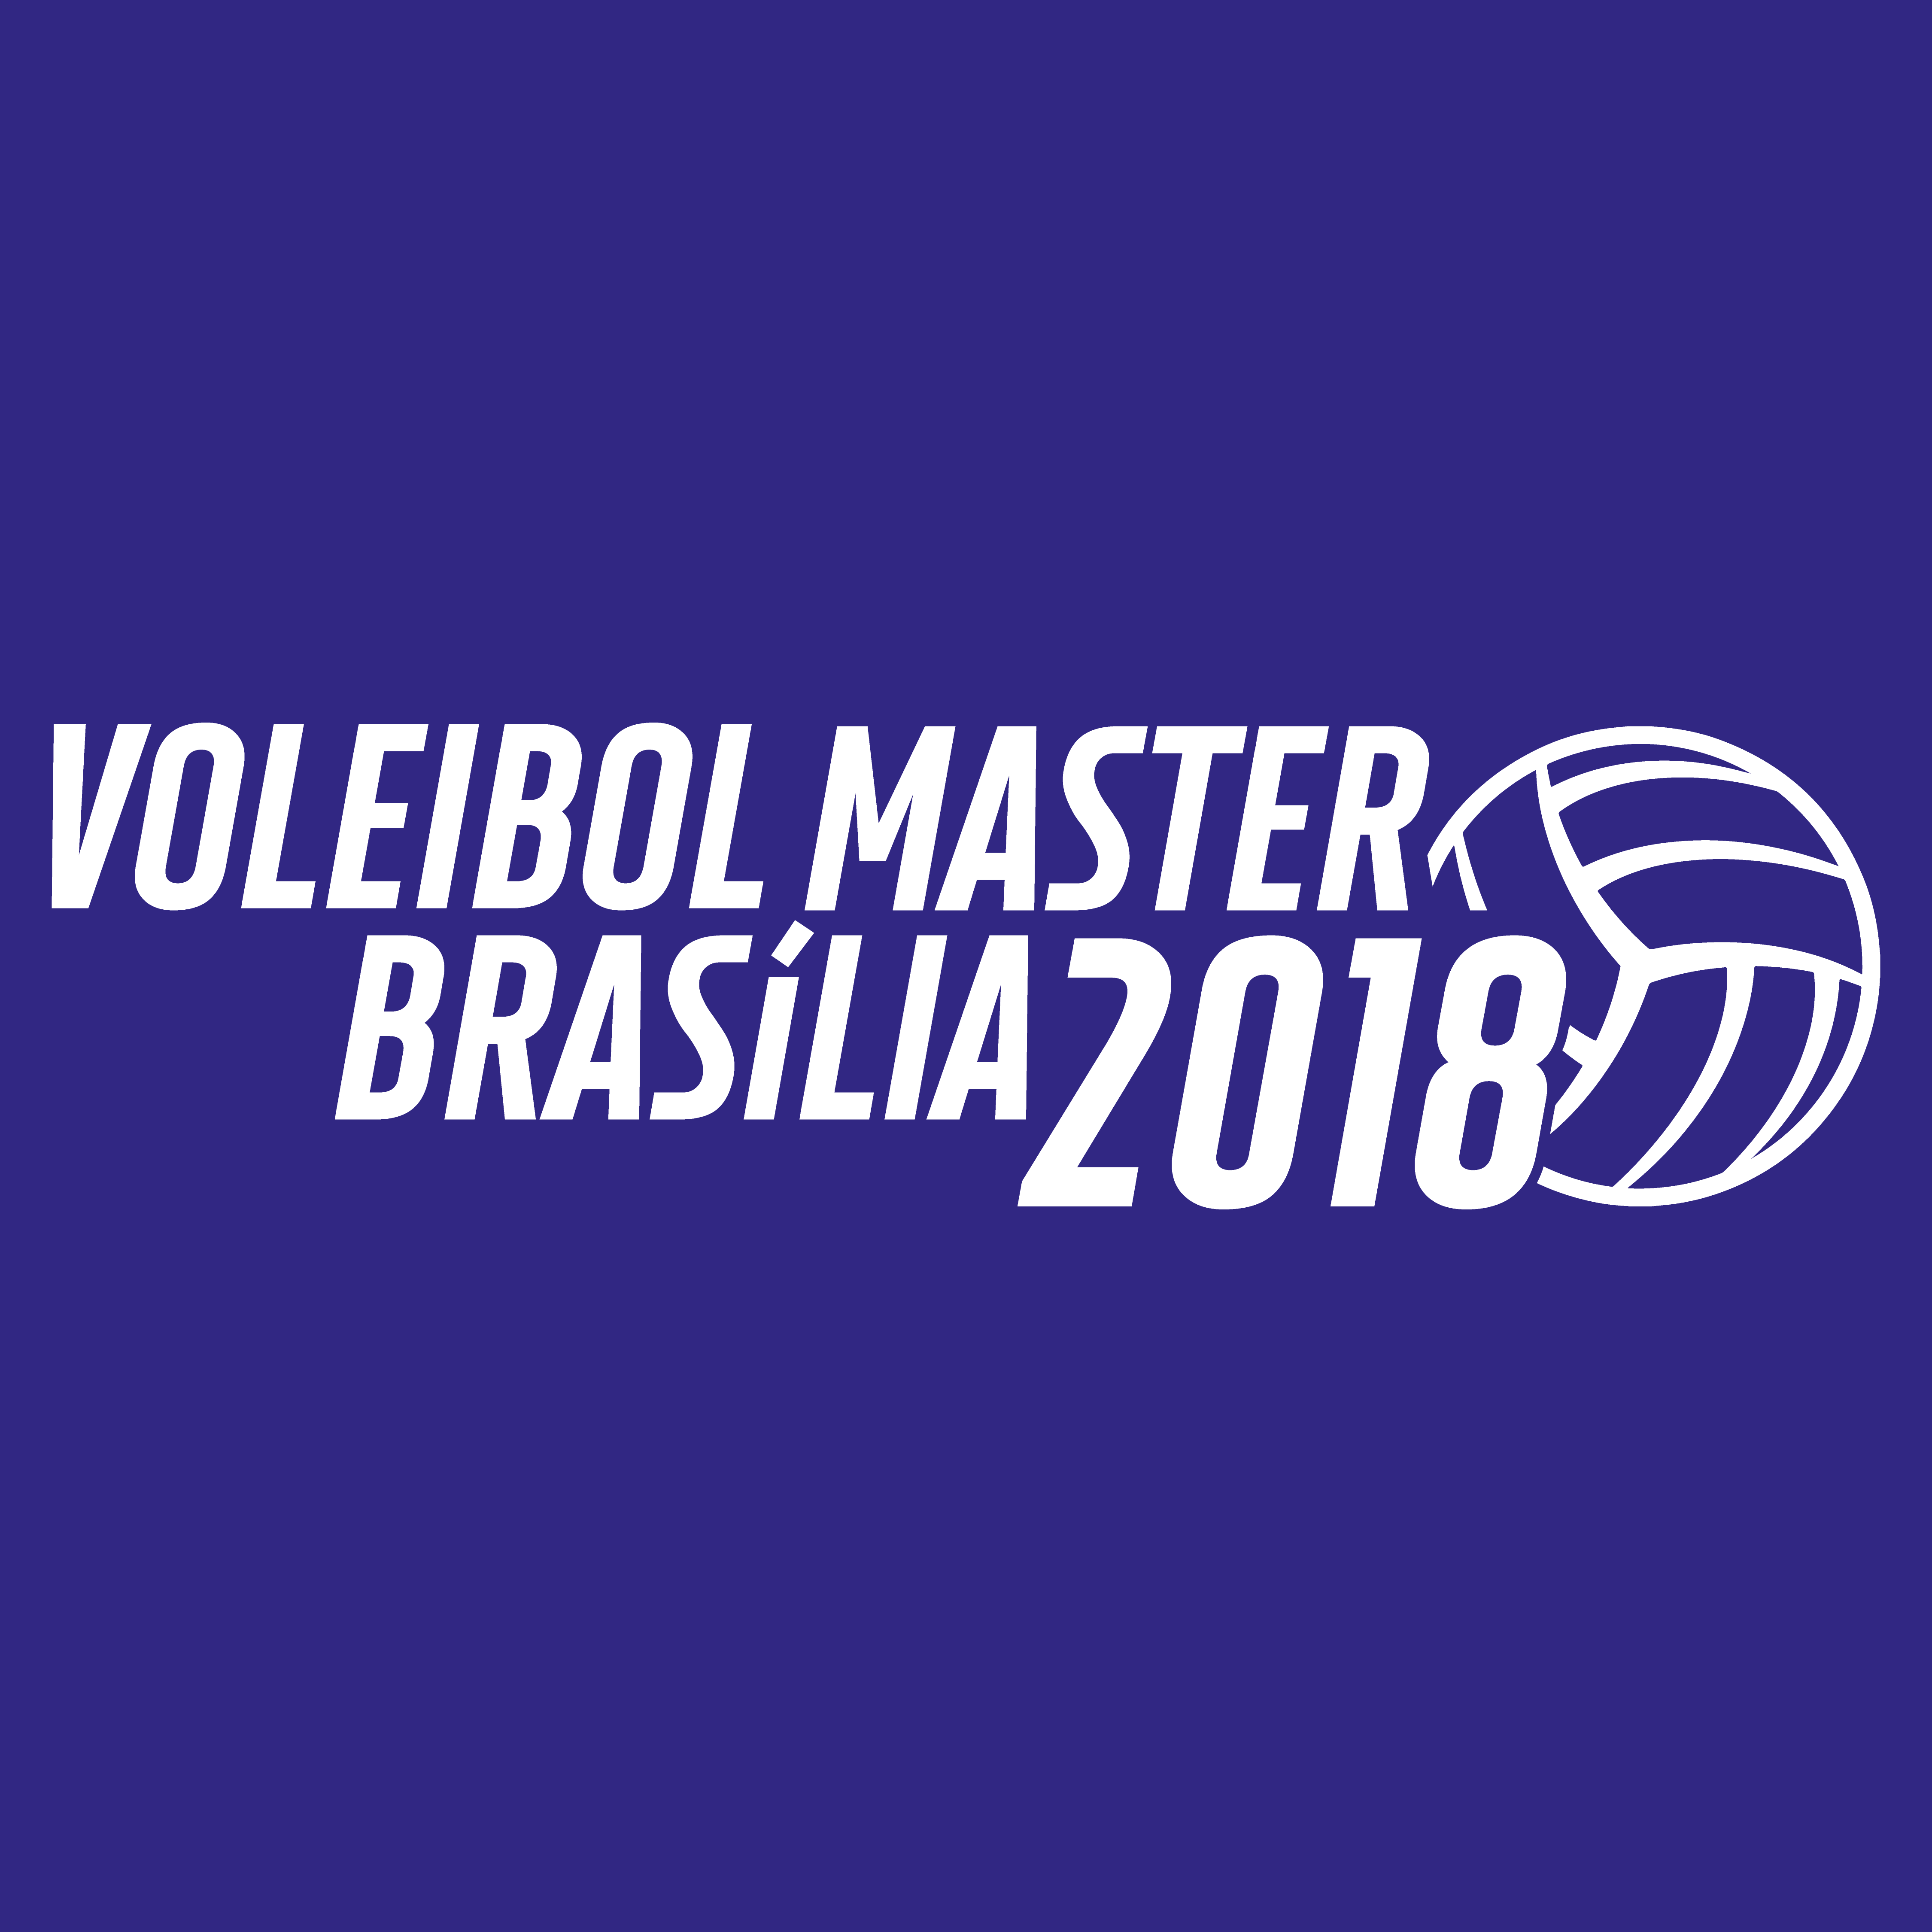 VOLEIBOL MASTER BRASÍLIA 2018 AZUL